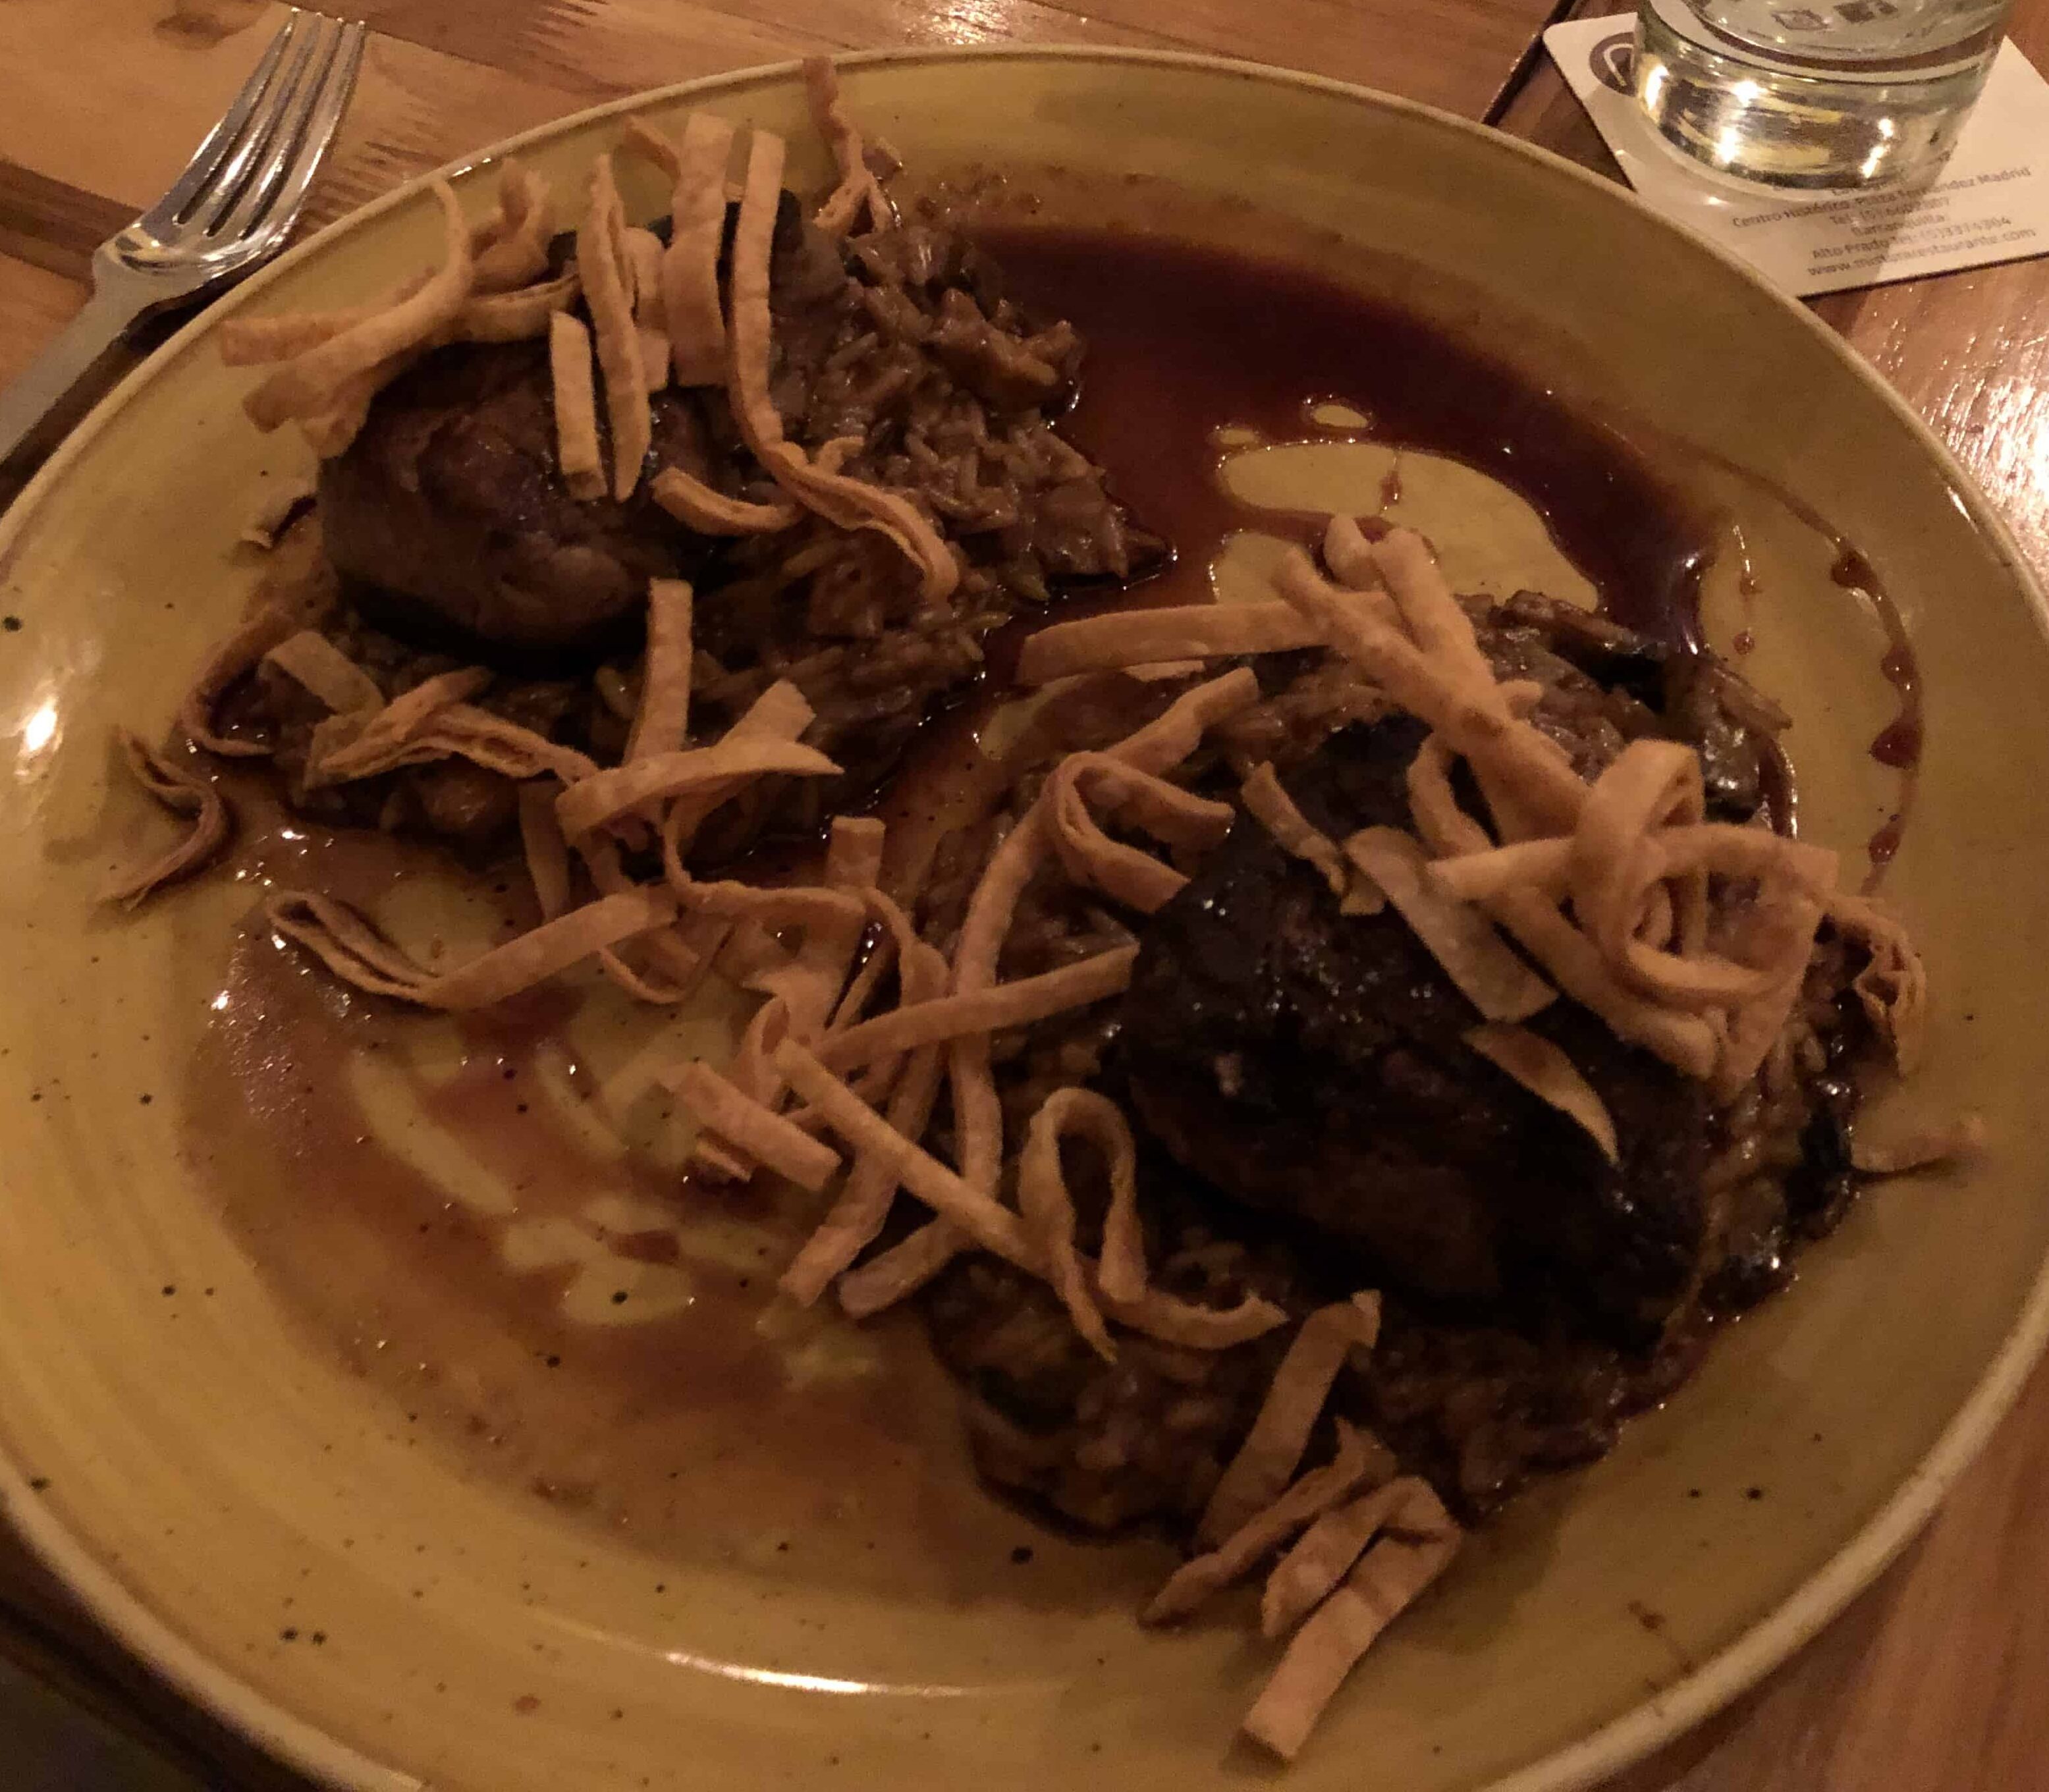 Steak with mushroom risotto at Mistura